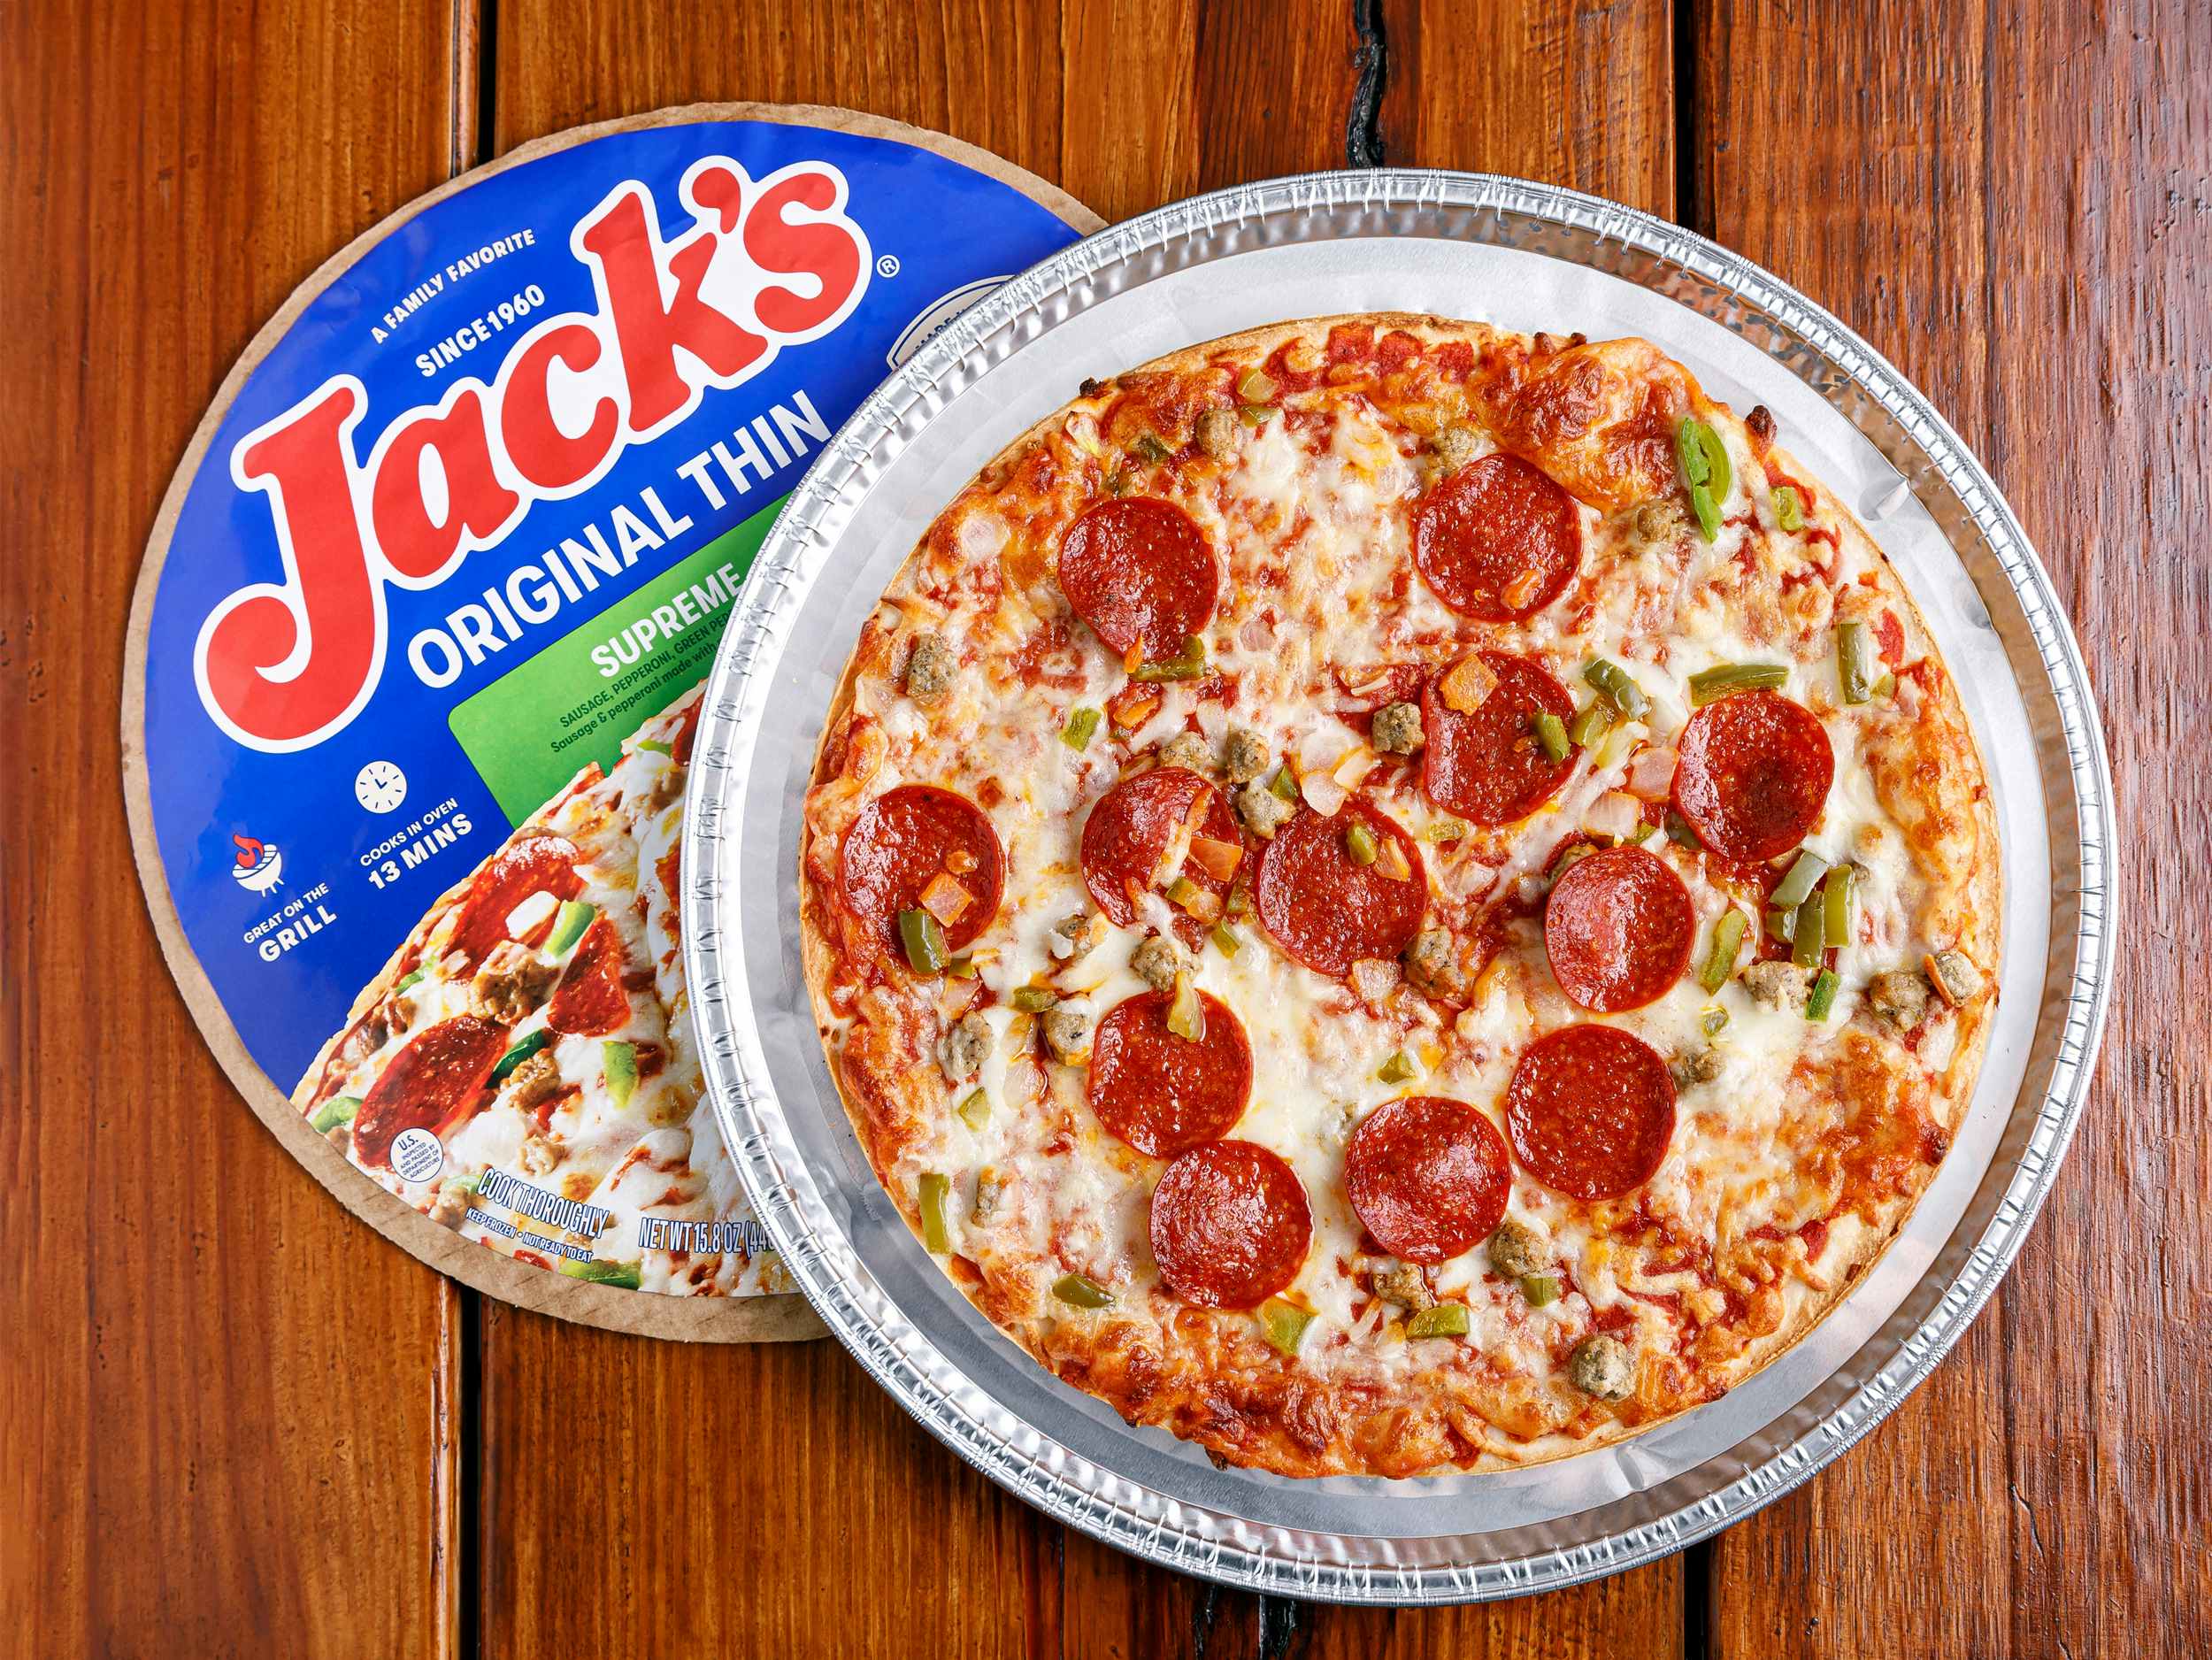 jacks original thin supreme frozen pizza